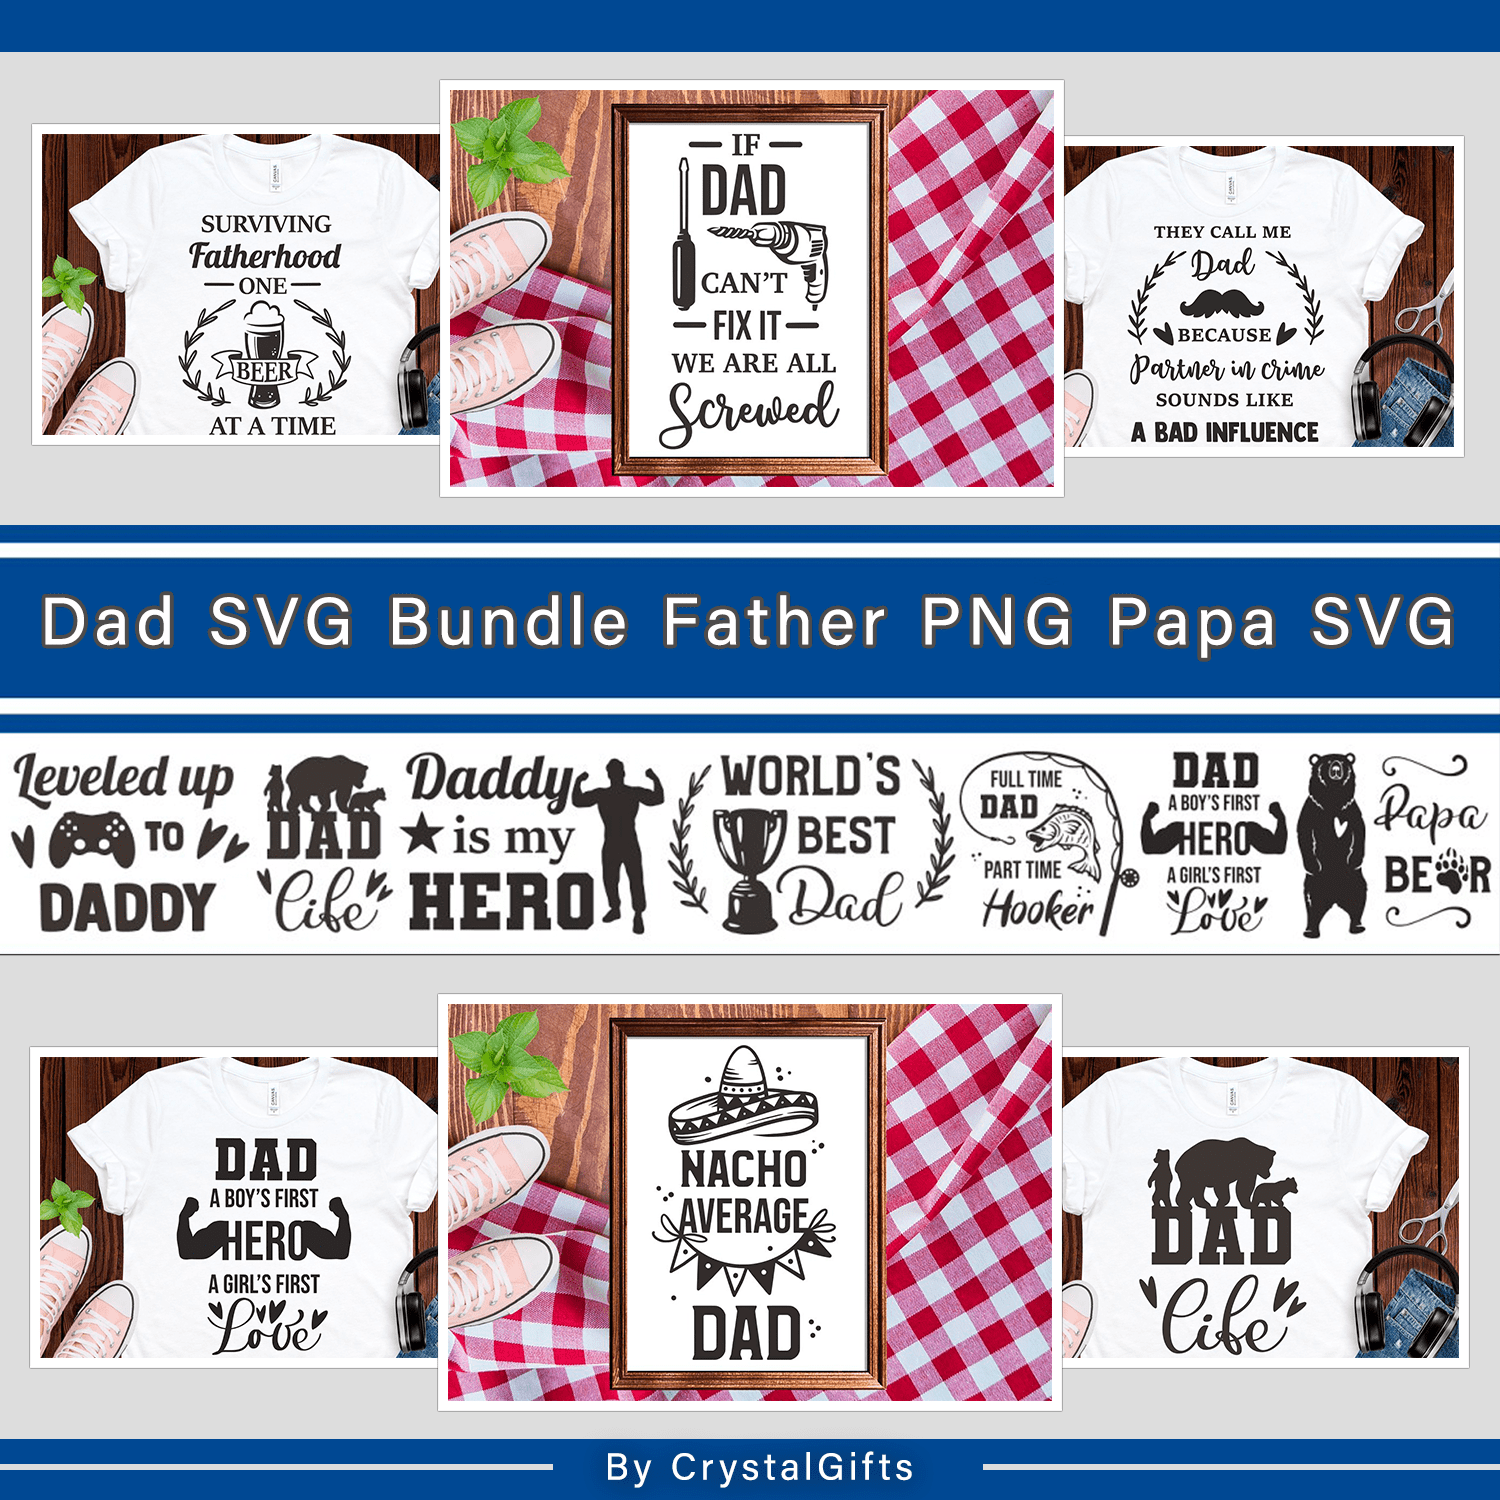 Dad SVG Bundle father PNG papa SVG cover.